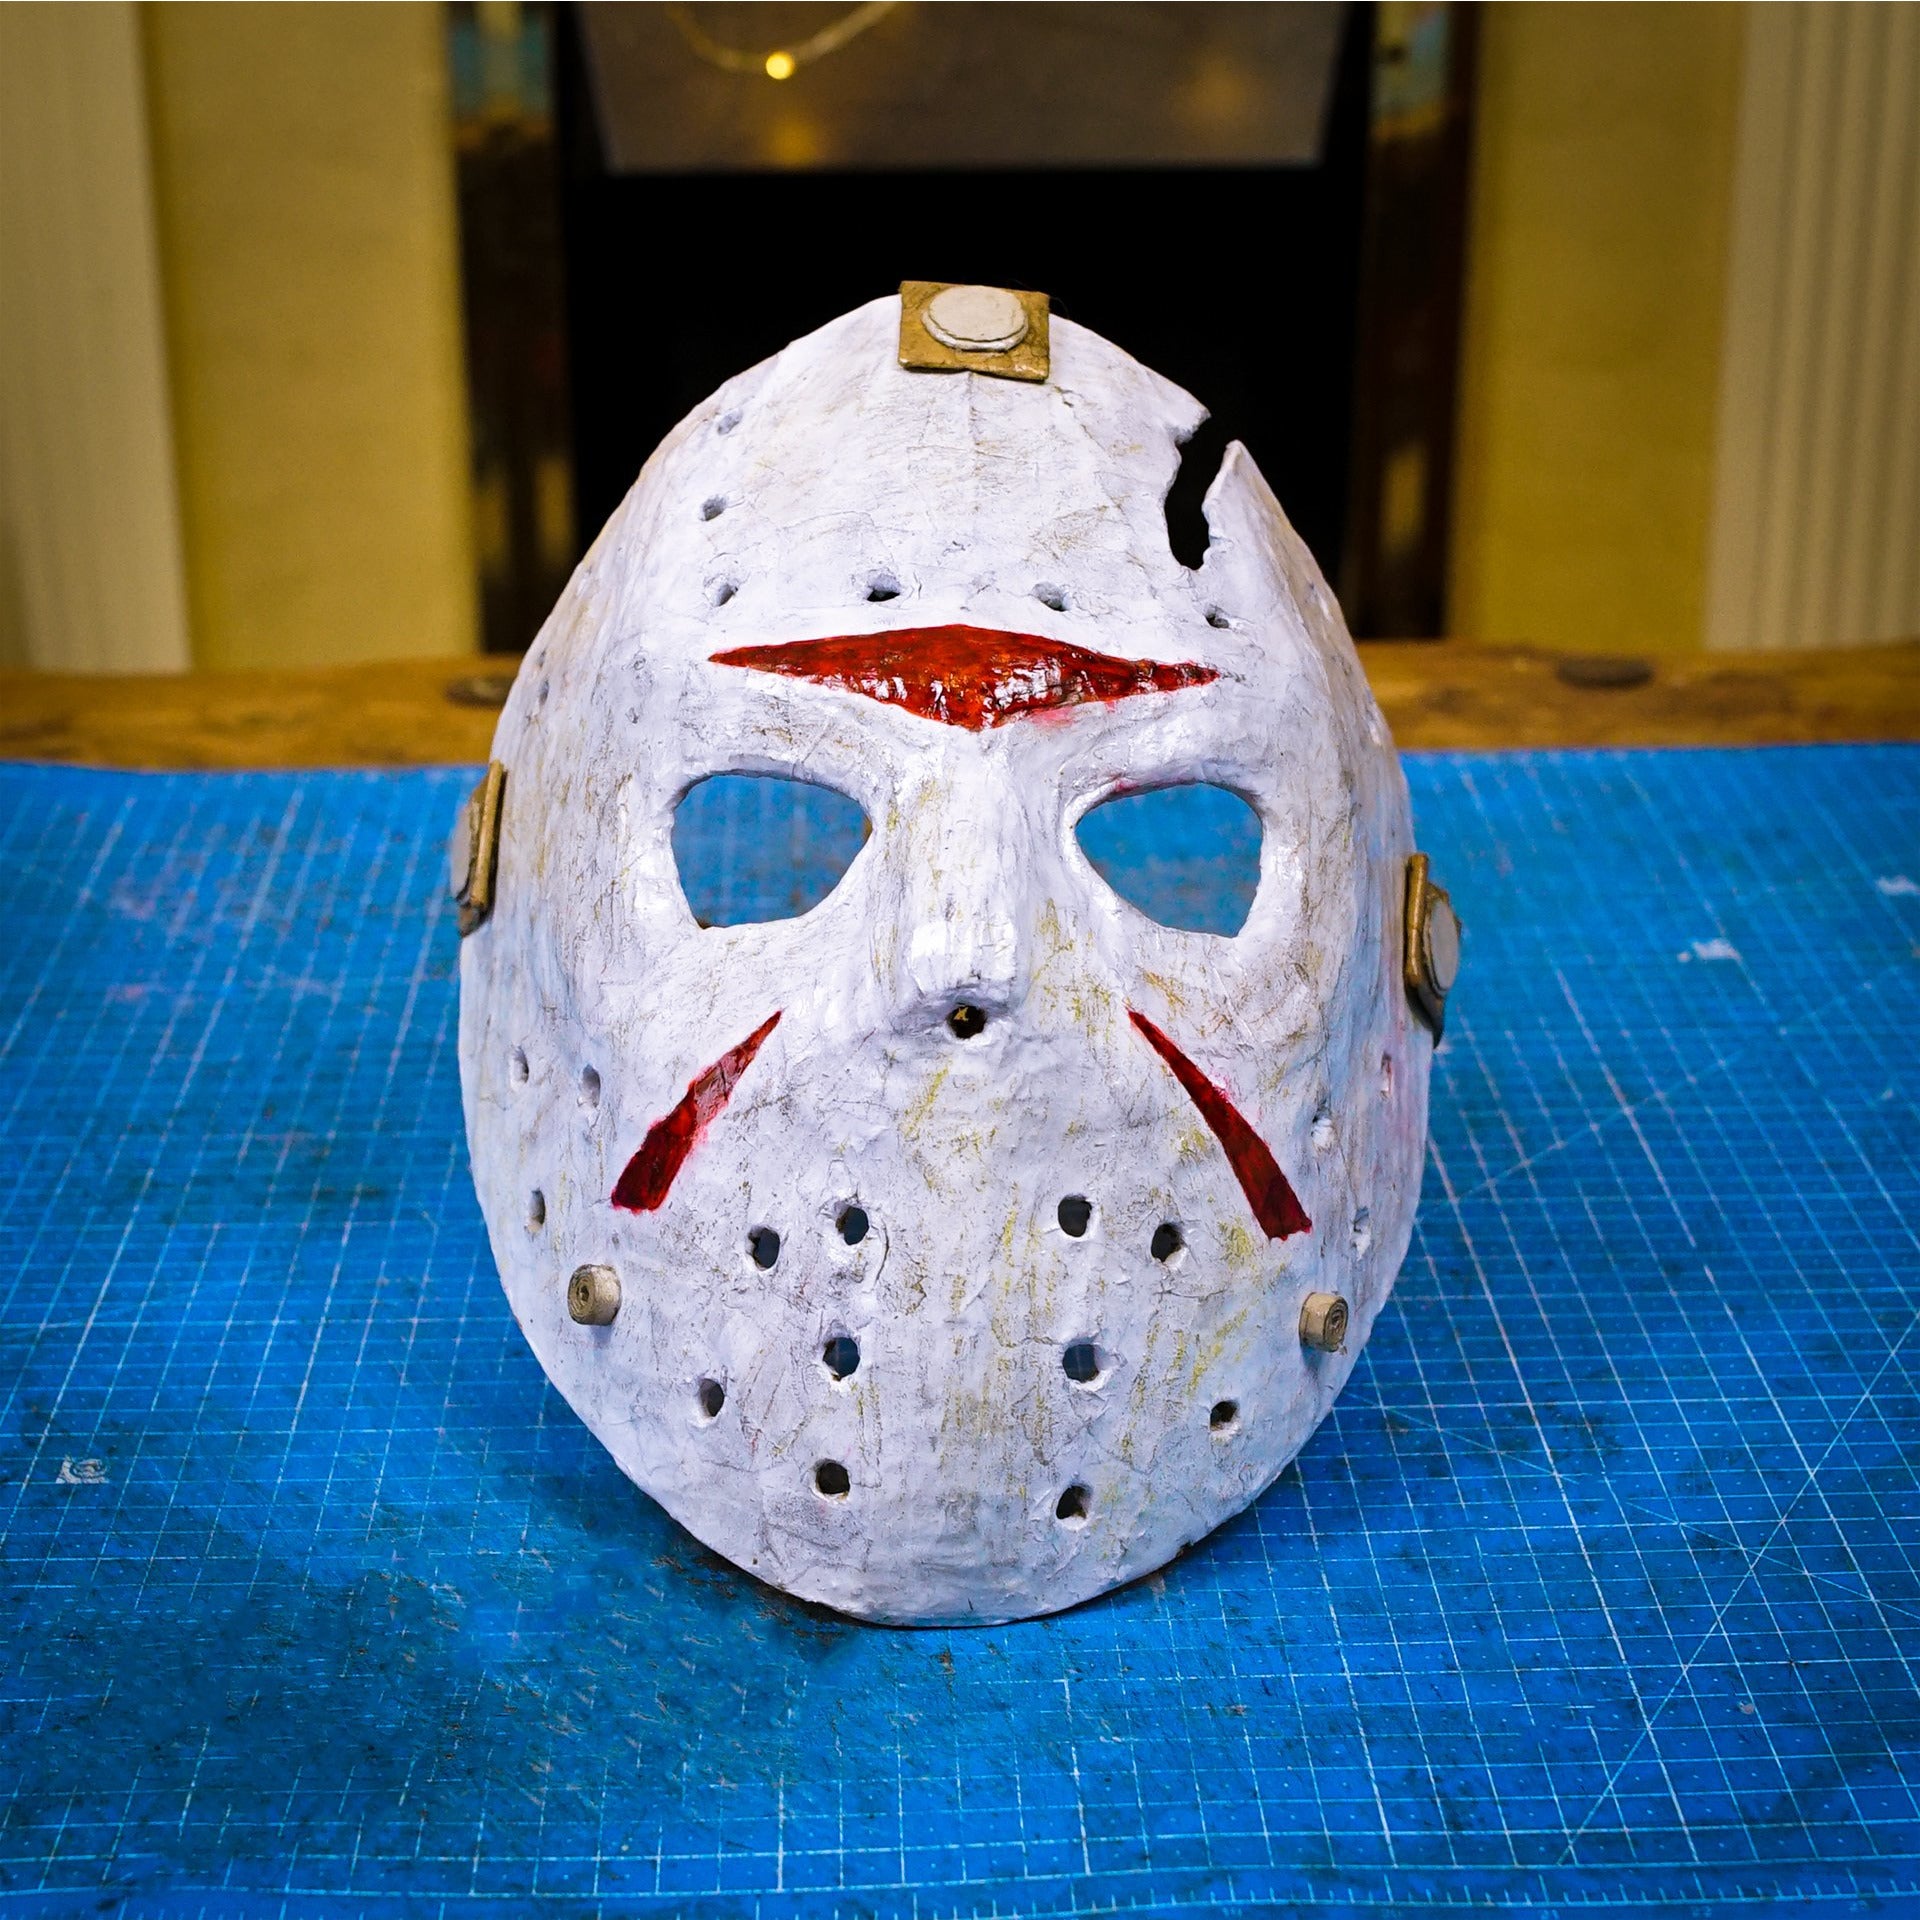 Jason Voorhees Masks Set